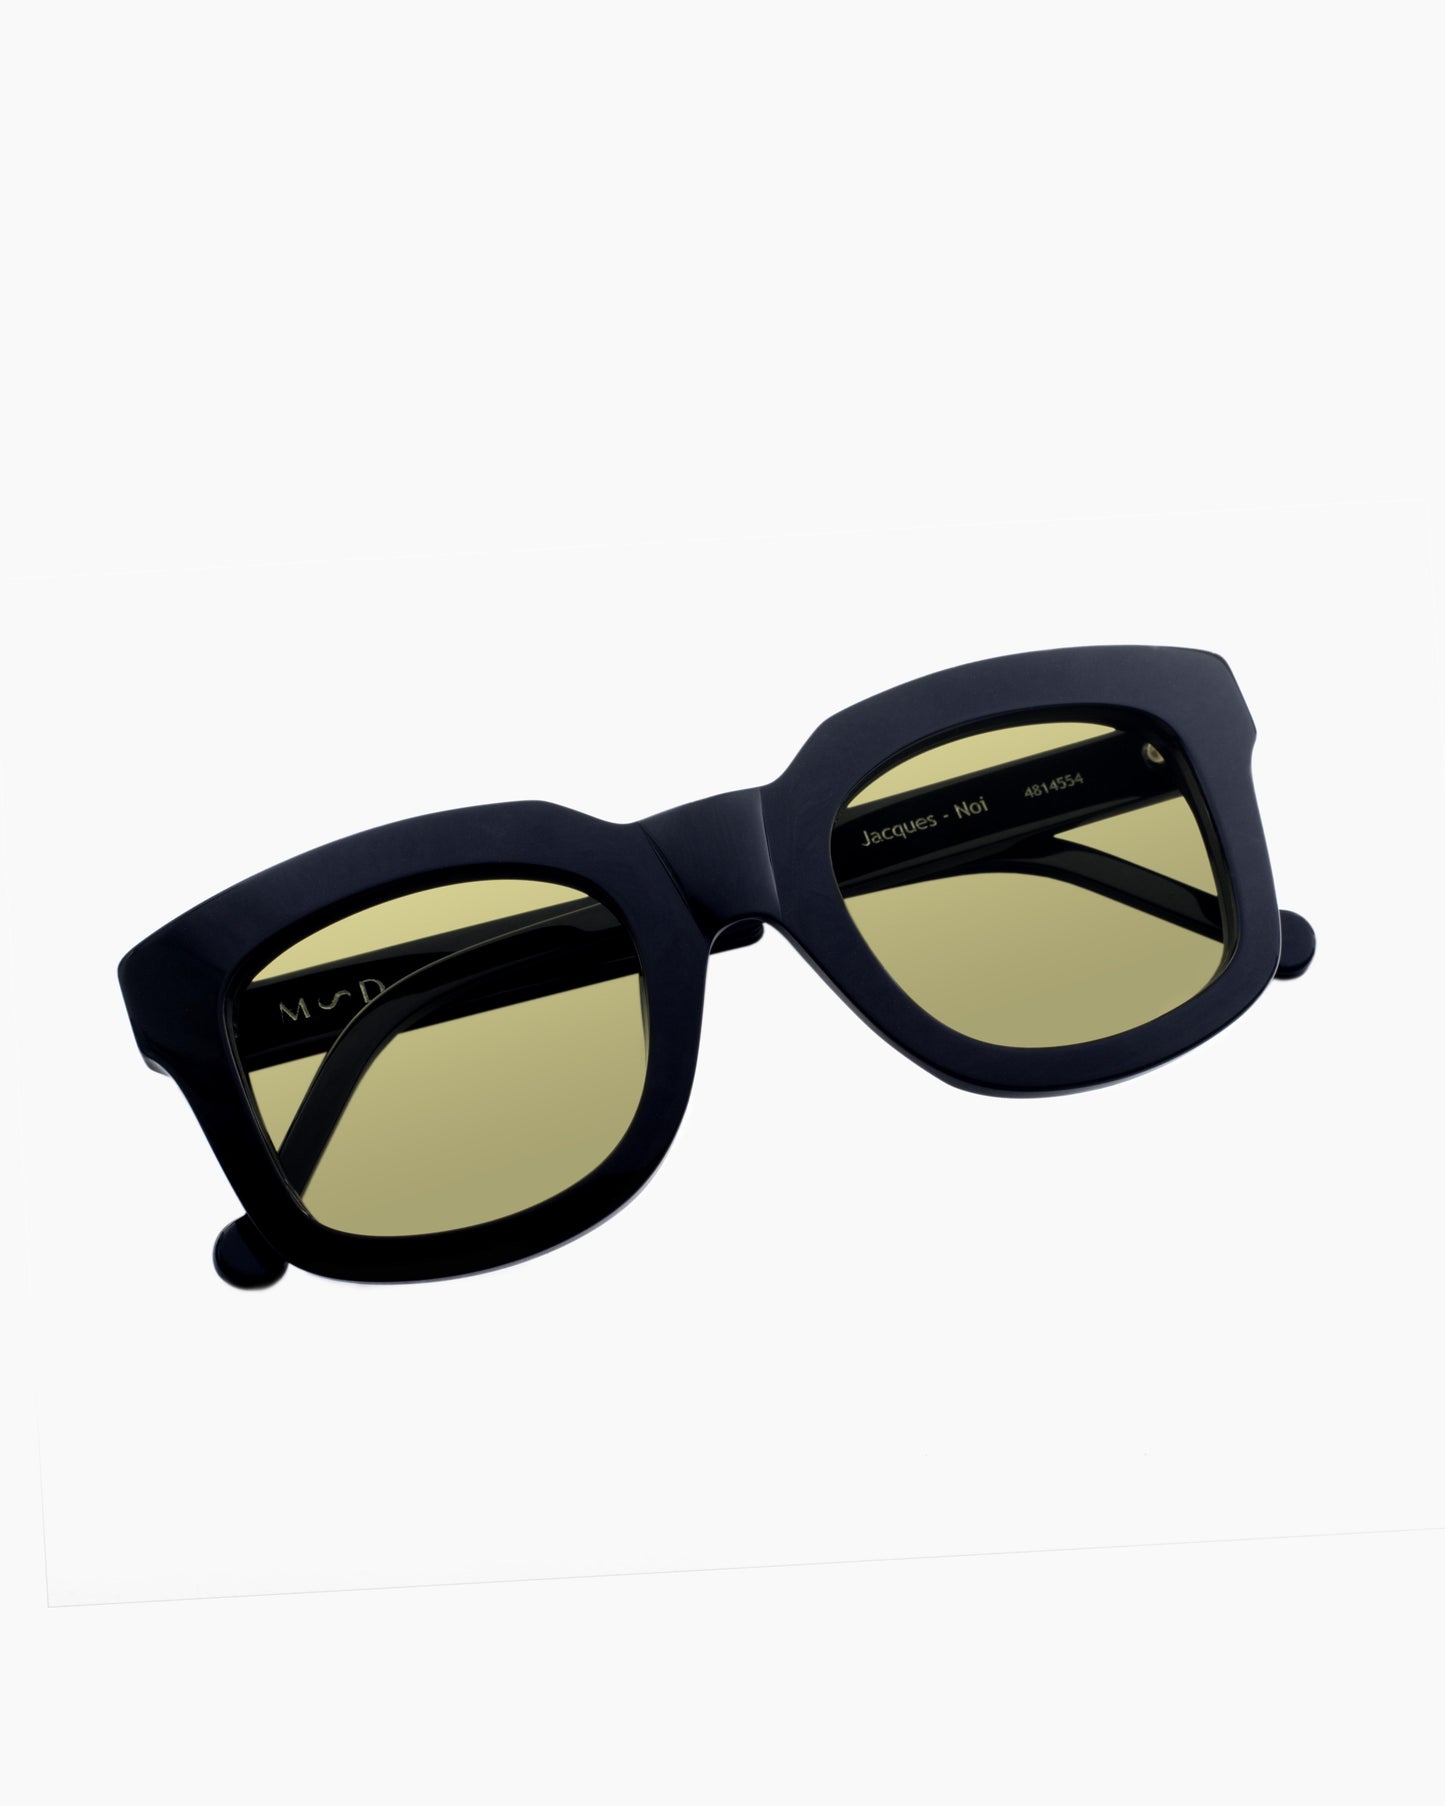 Marie-Sophie Dion - Jacques - Noi yellow lens | glasses bar